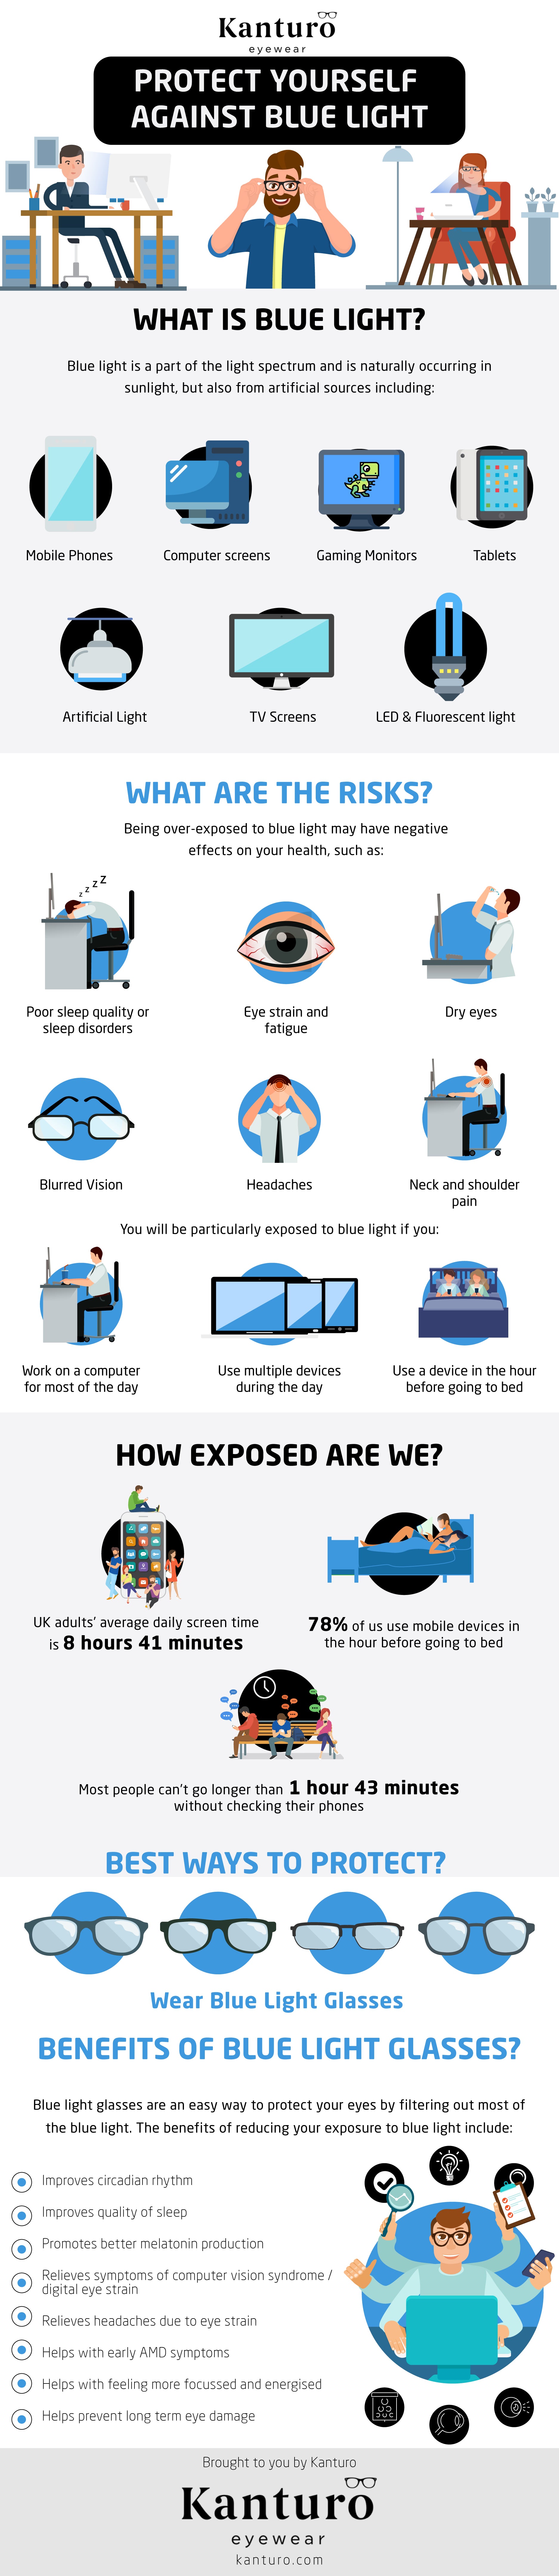 kanturo blue light protection infographic